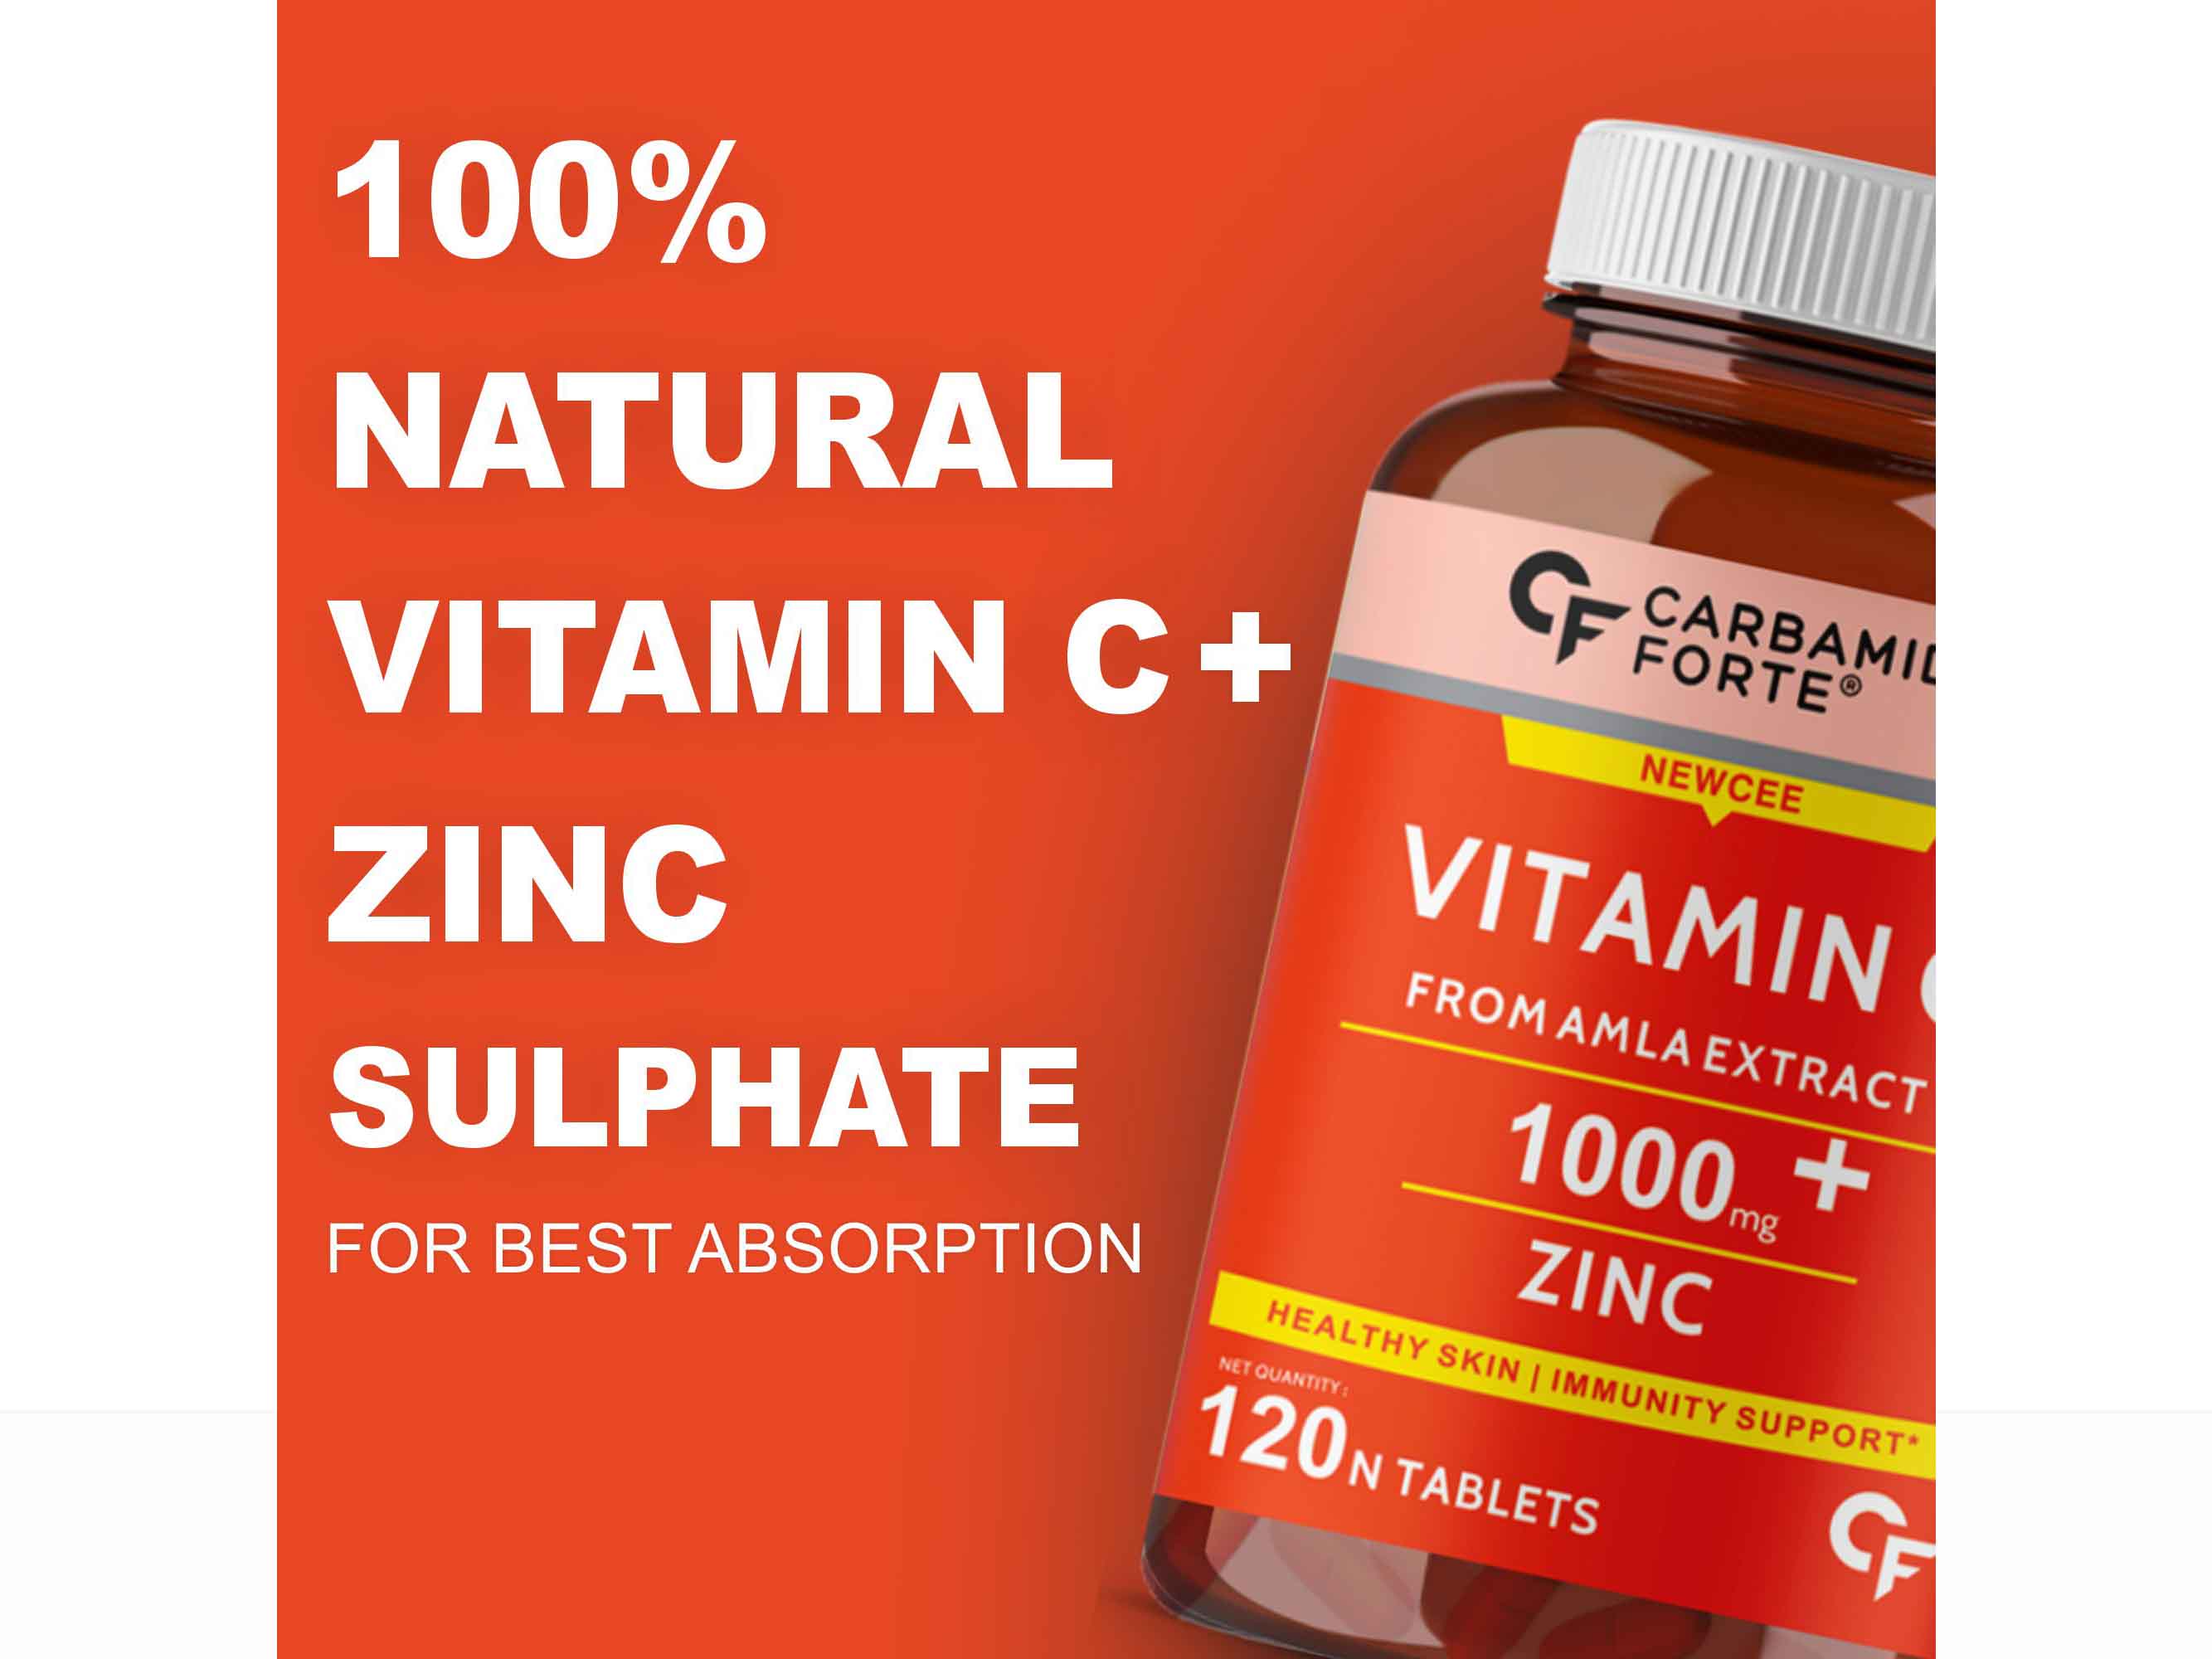 Carbamide Forte Vitamin C 1000mg Tablet For Men